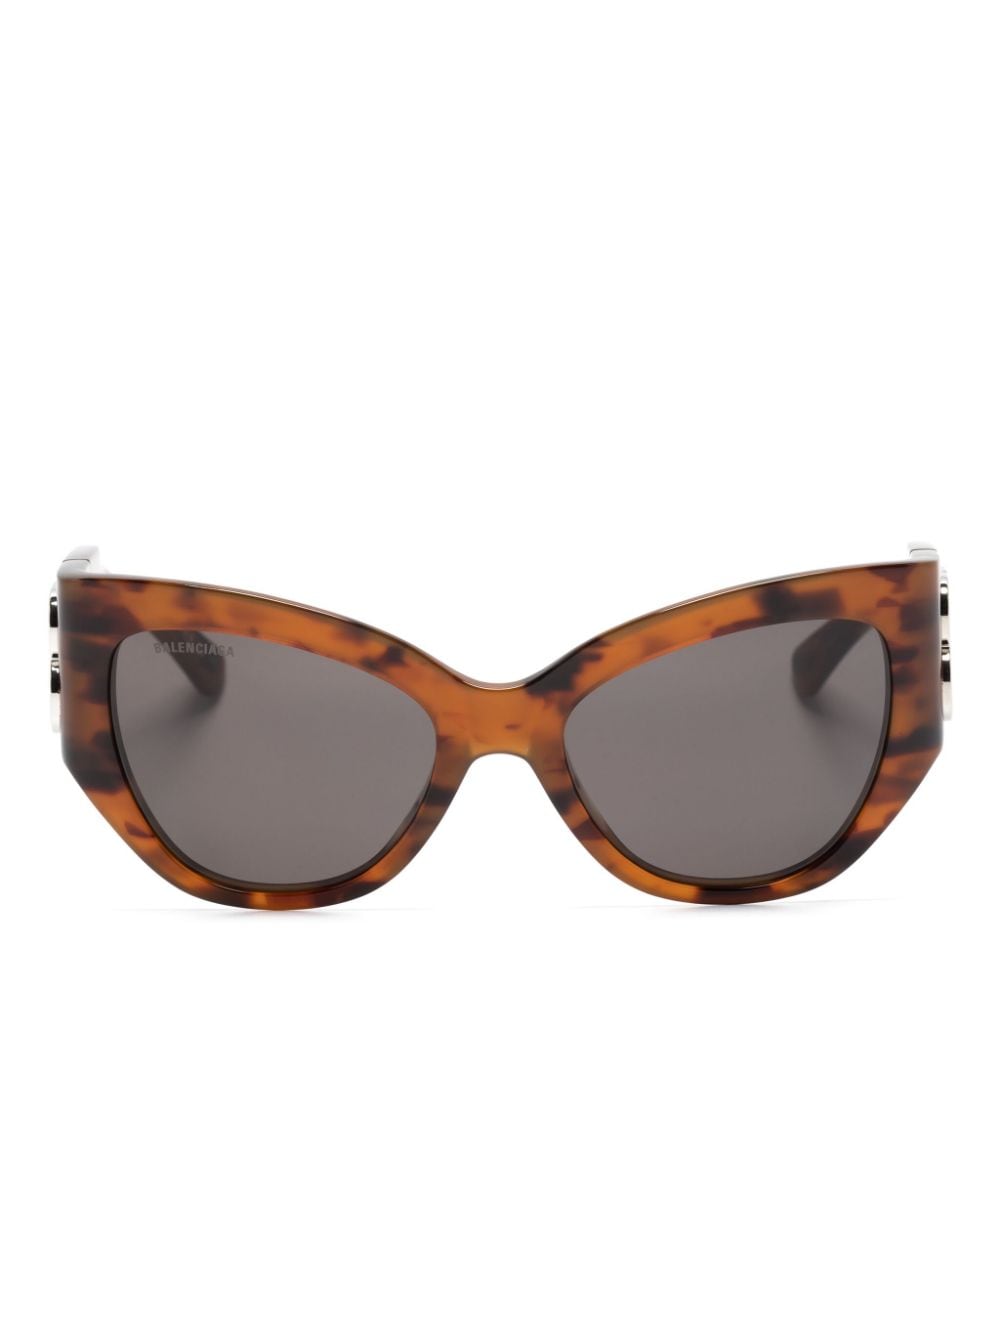 Balenciaga Eyewear Occhiali da sole cat-eye con placca logo - Marrone